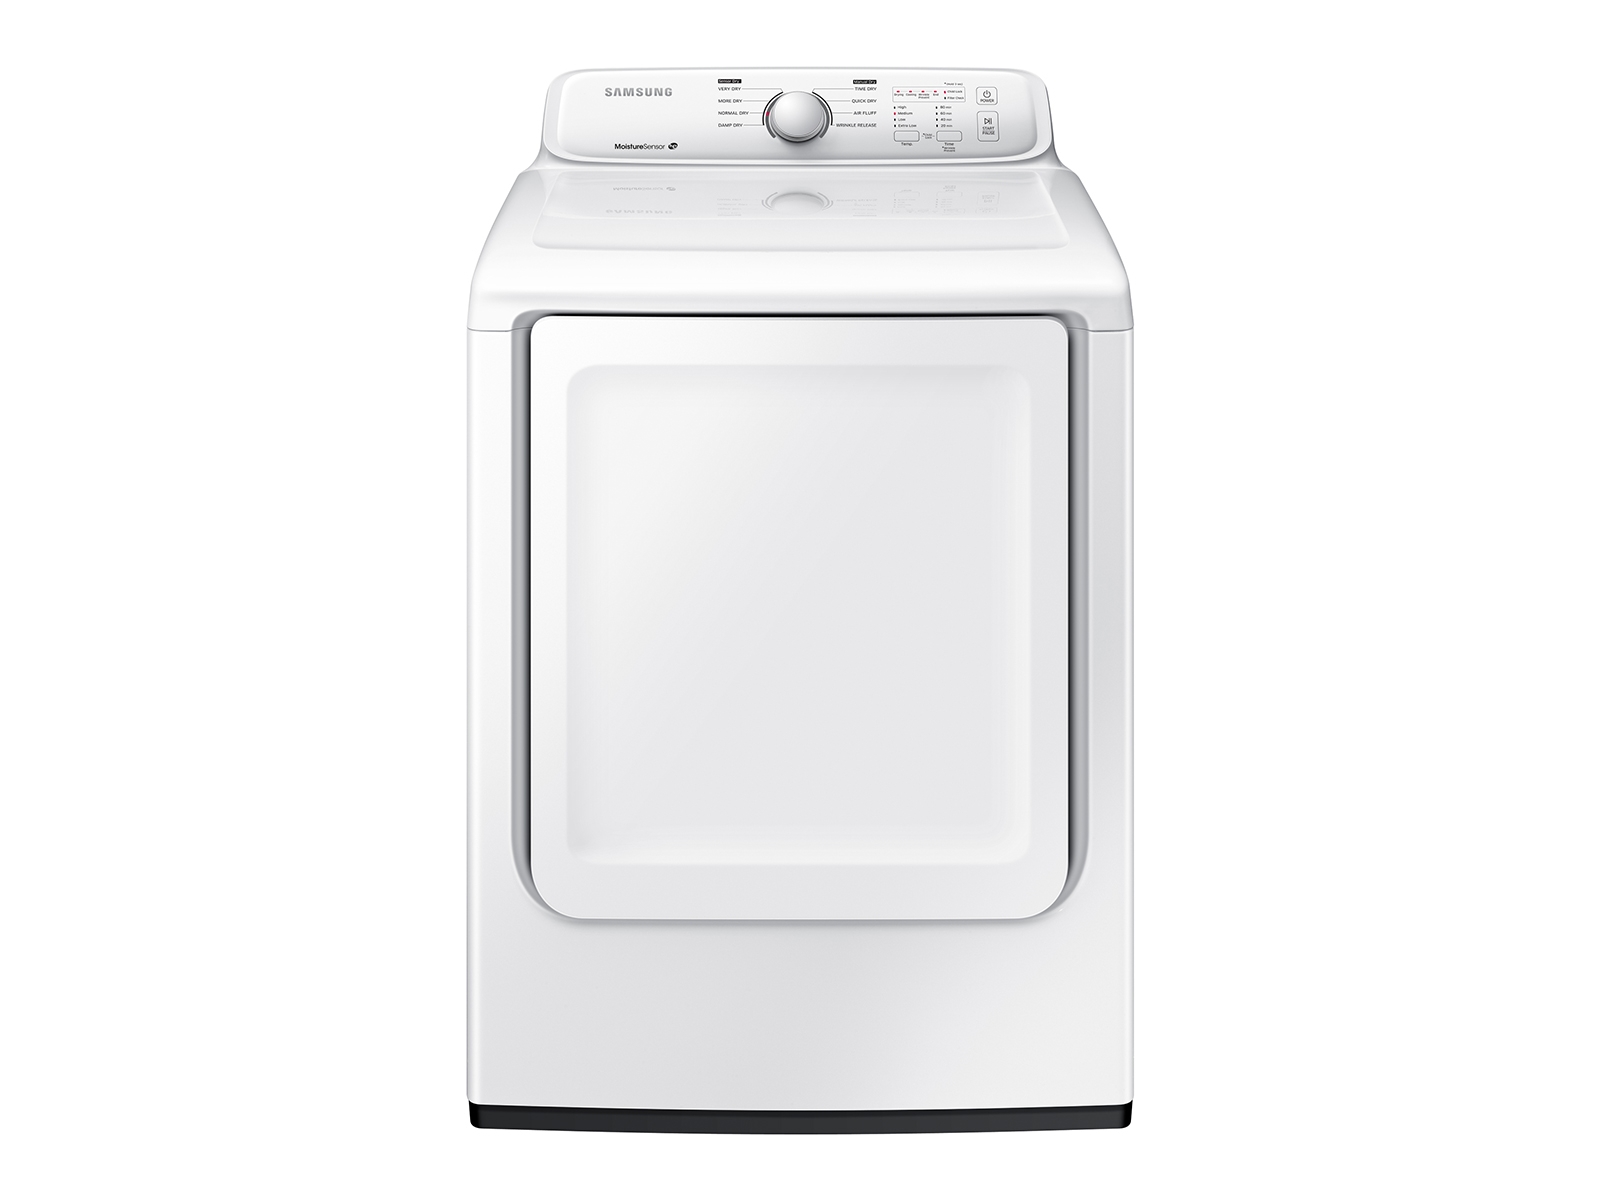 Photos - Tumble Dryer Samsung 7.2 cu. ft. Electric Dryer with Moisture Sensor in White(DV40J3000 